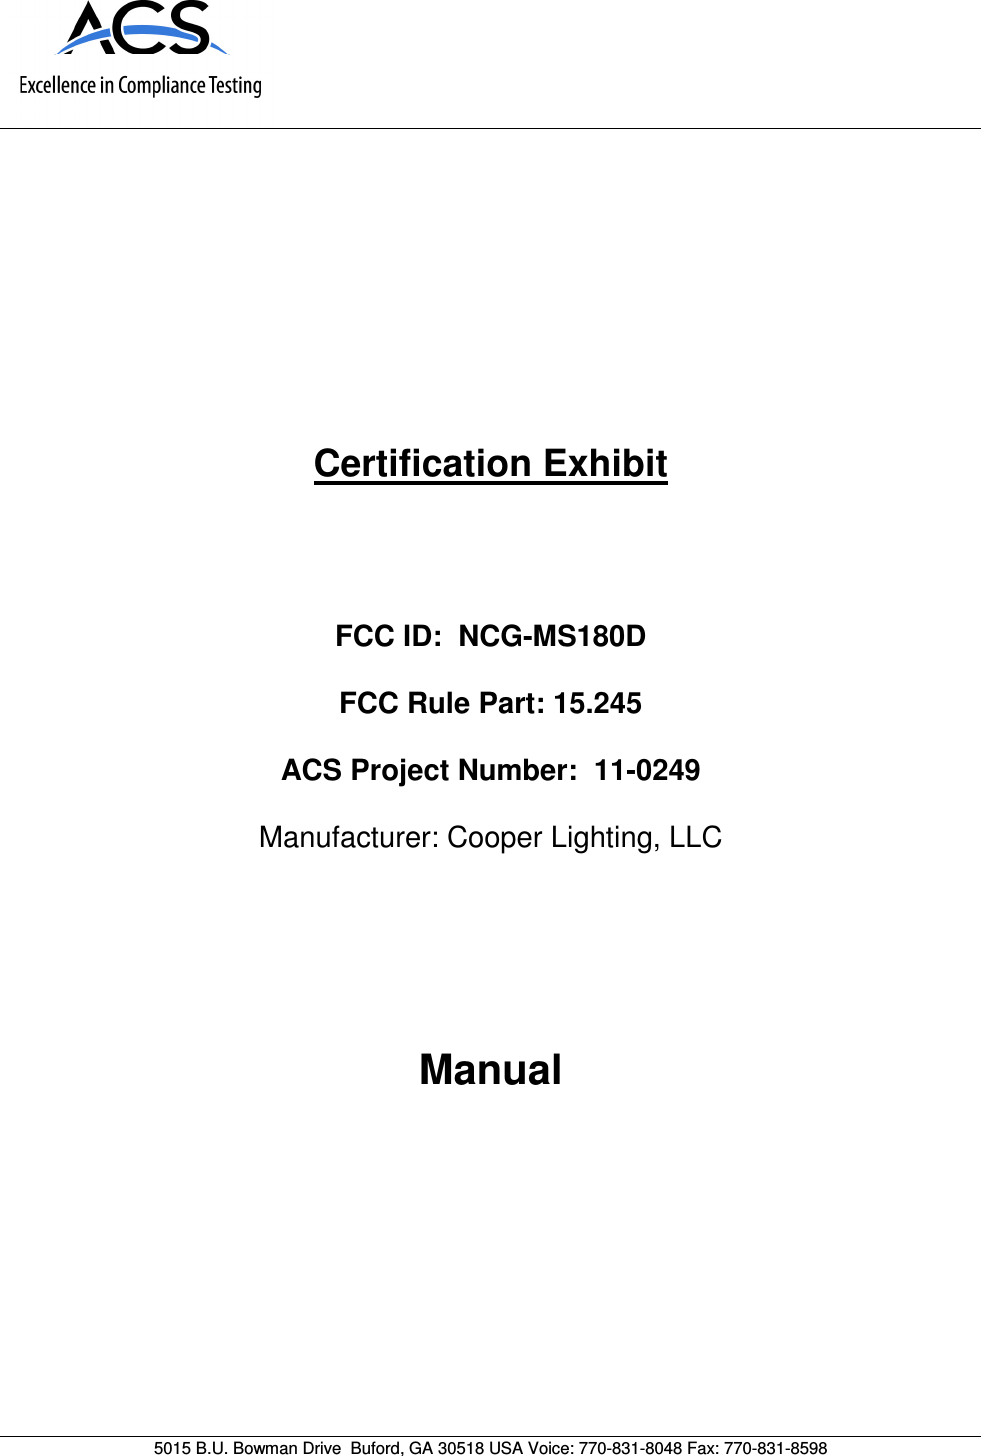      5015 B.U. Bowman Drive  Buford, GA 30518 USA Voice: 770-831-8048 Fax: 770-831-8598   Certification Exhibit     FCC ID:  NCG-MS180D  FCC Rule Part: 15.245  ACS Project Number:  11-0249   Manufacturer: Cooper Lighting, LLC     Manual  